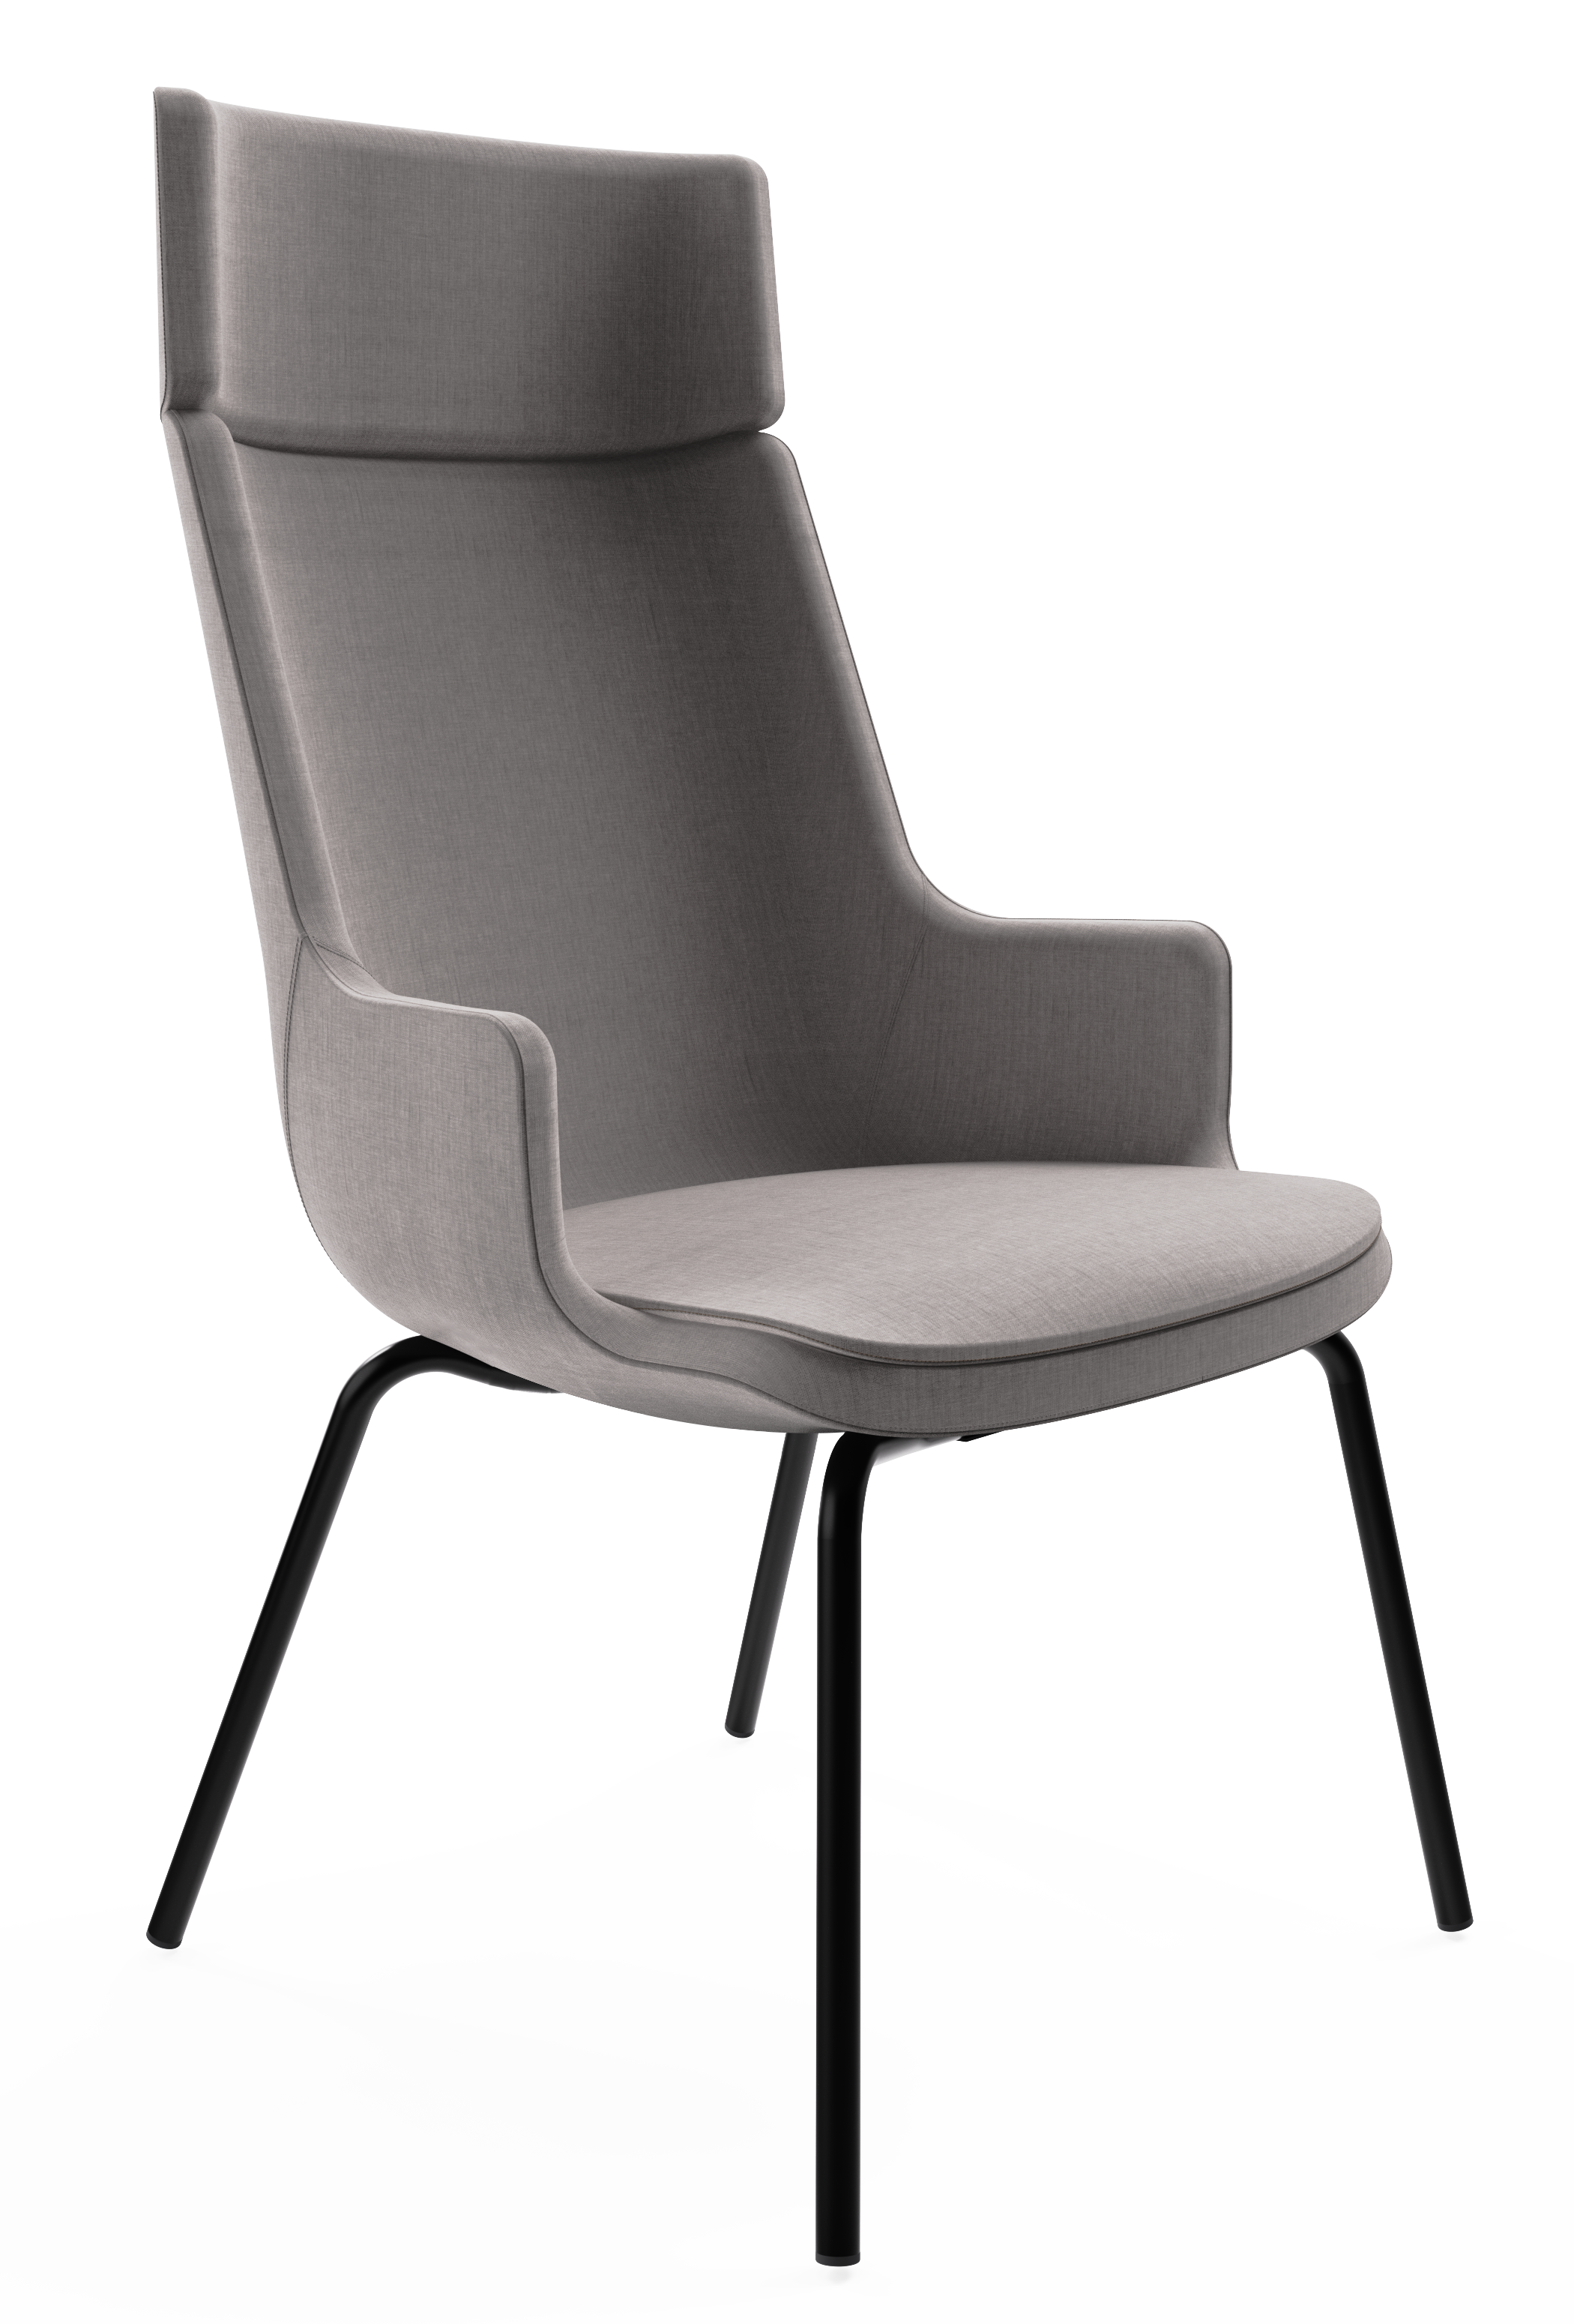 WS - Contour chair - High, 4 leg black base (Front angle)